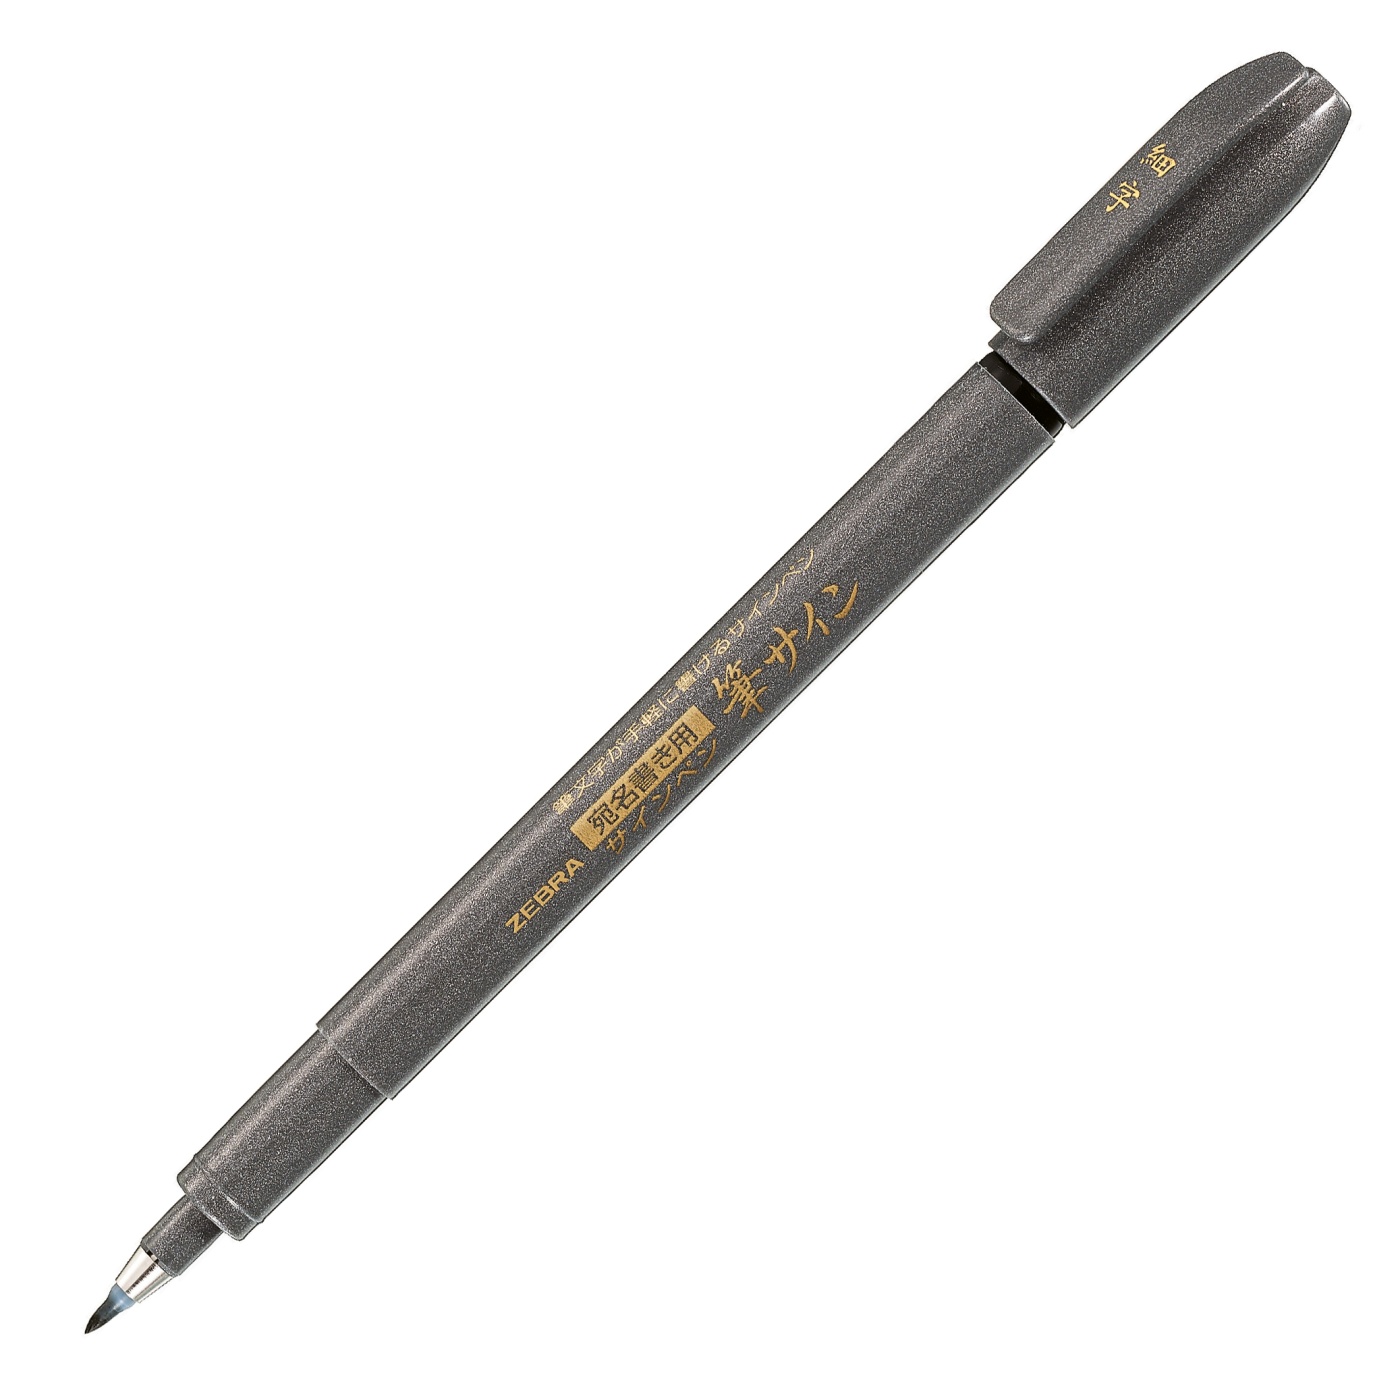 Zensations Brush Pen in der Gruppe Stifte / Künstlerstifte / Pinselstifte bei Pen Store (102180_r)